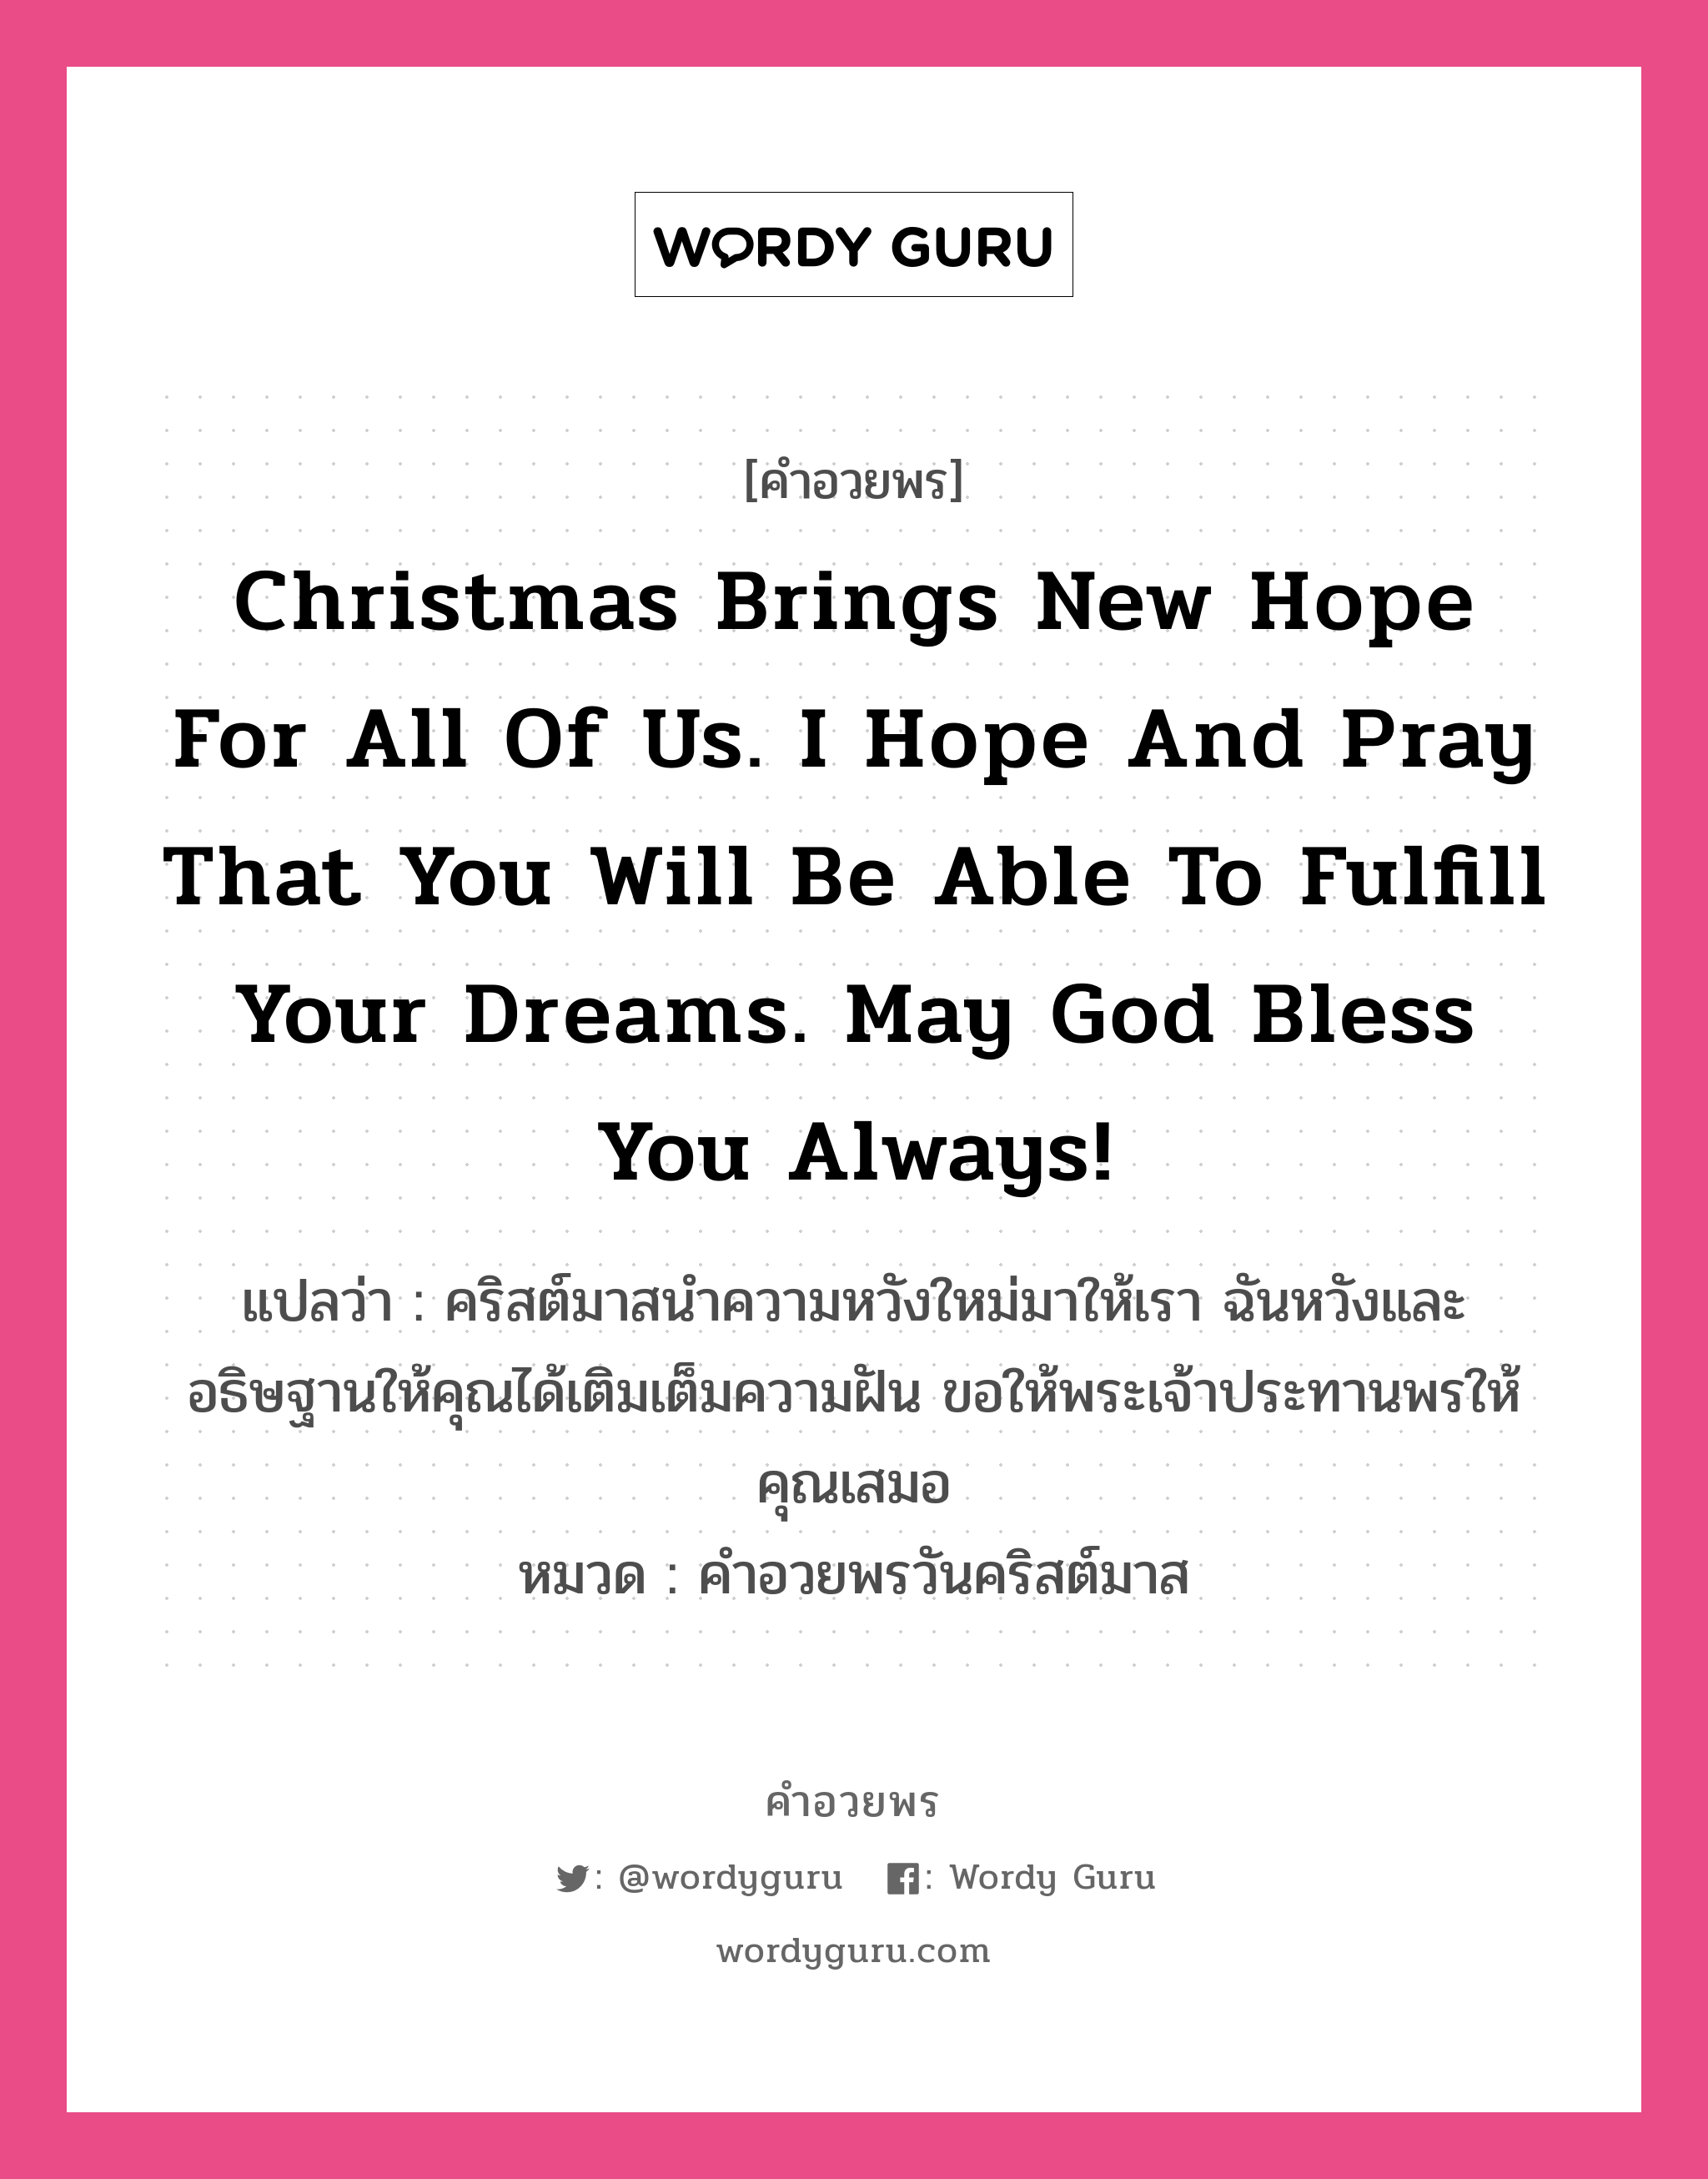 Christmas brings new hope for all of us. I hope and pray that you will be able to fulfill your dreams. May God bless you always! คำศัพท์ในกลุ่มประเภท คำอวยพรวันคริสต์มาส, แปลว่า คริสต์มาสนำความหวังใหม่มาให้เรา ฉันหวังและอธิษฐานให้คุณได้เติมเต็มความฝัน ขอให้พระเจ้าประทานพรให้คุณเสมอ หมวด คำอวยพรวันคริสต์มาส หมวด คำอวยพรวันคริสต์มาส